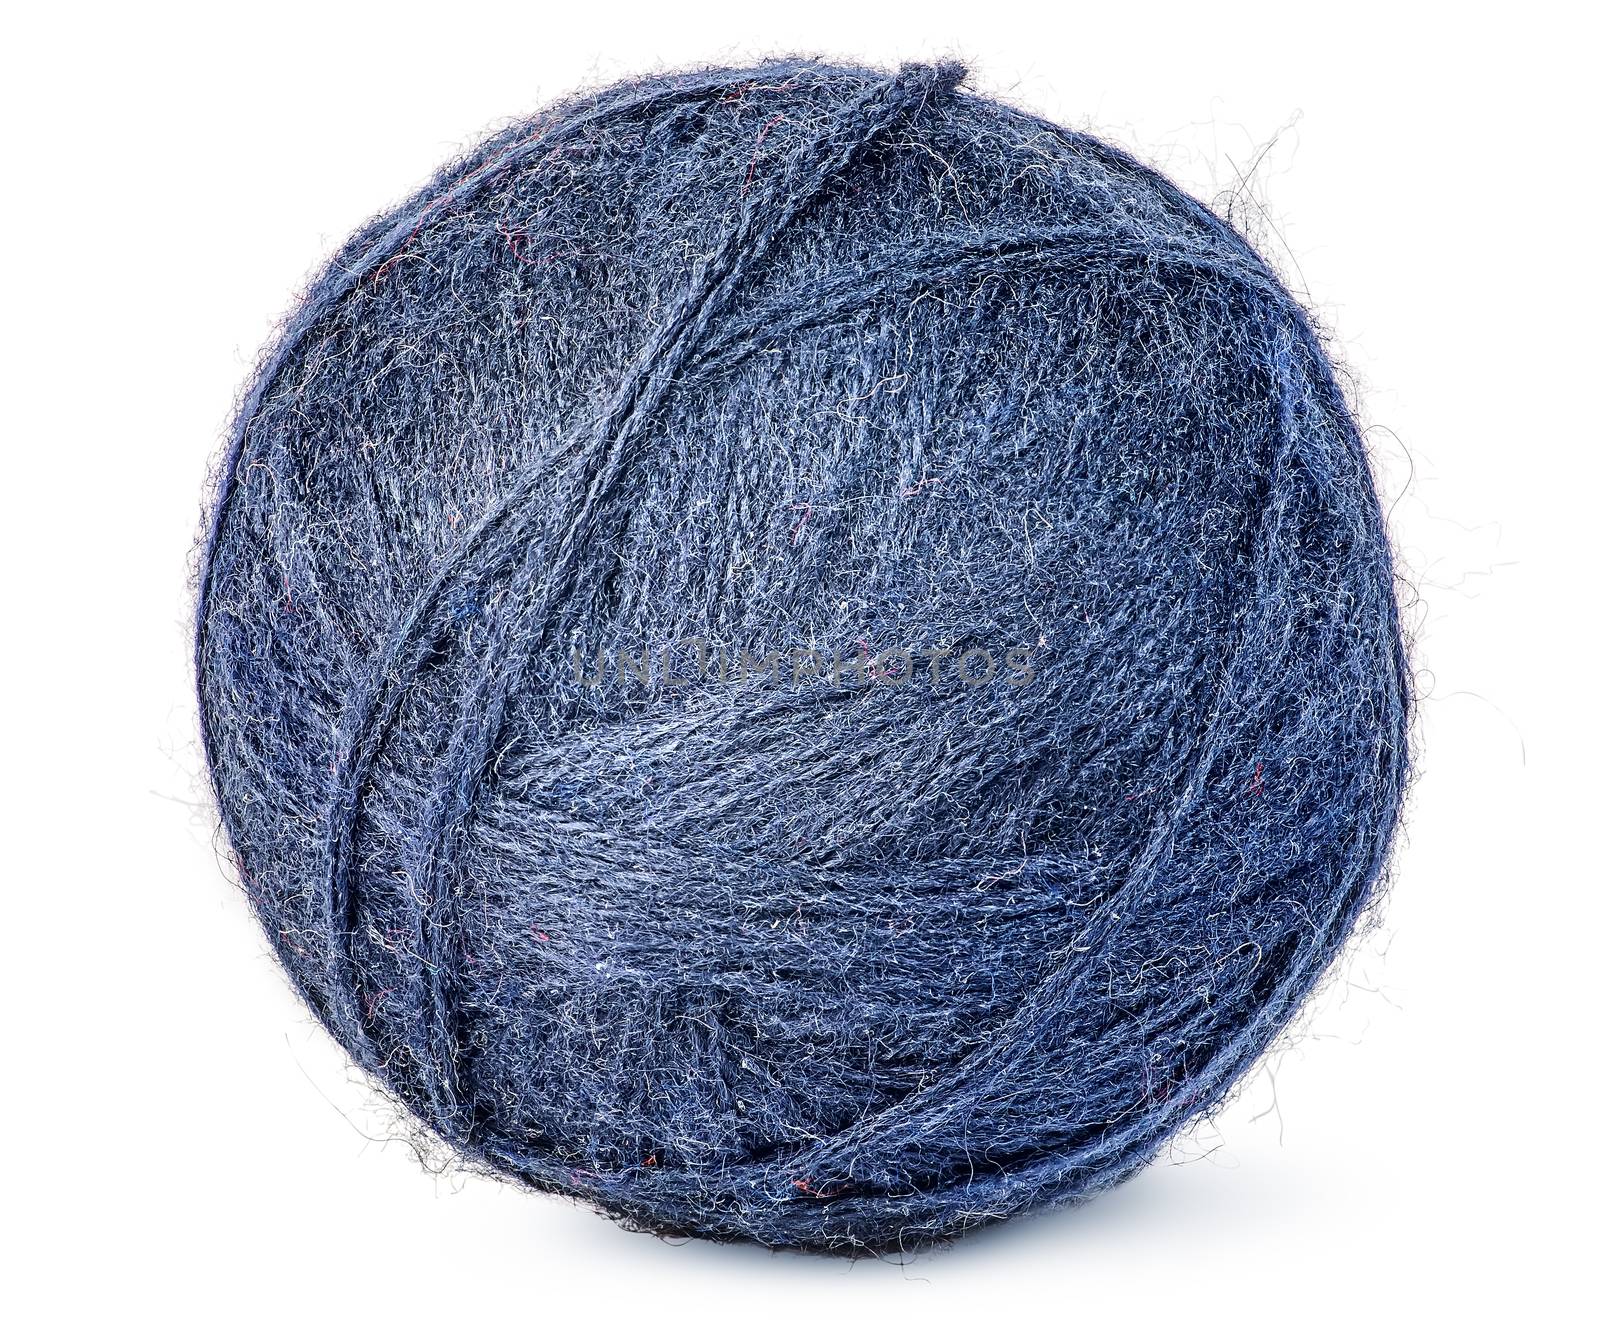 Ball of blue wool yarn by Cipariss